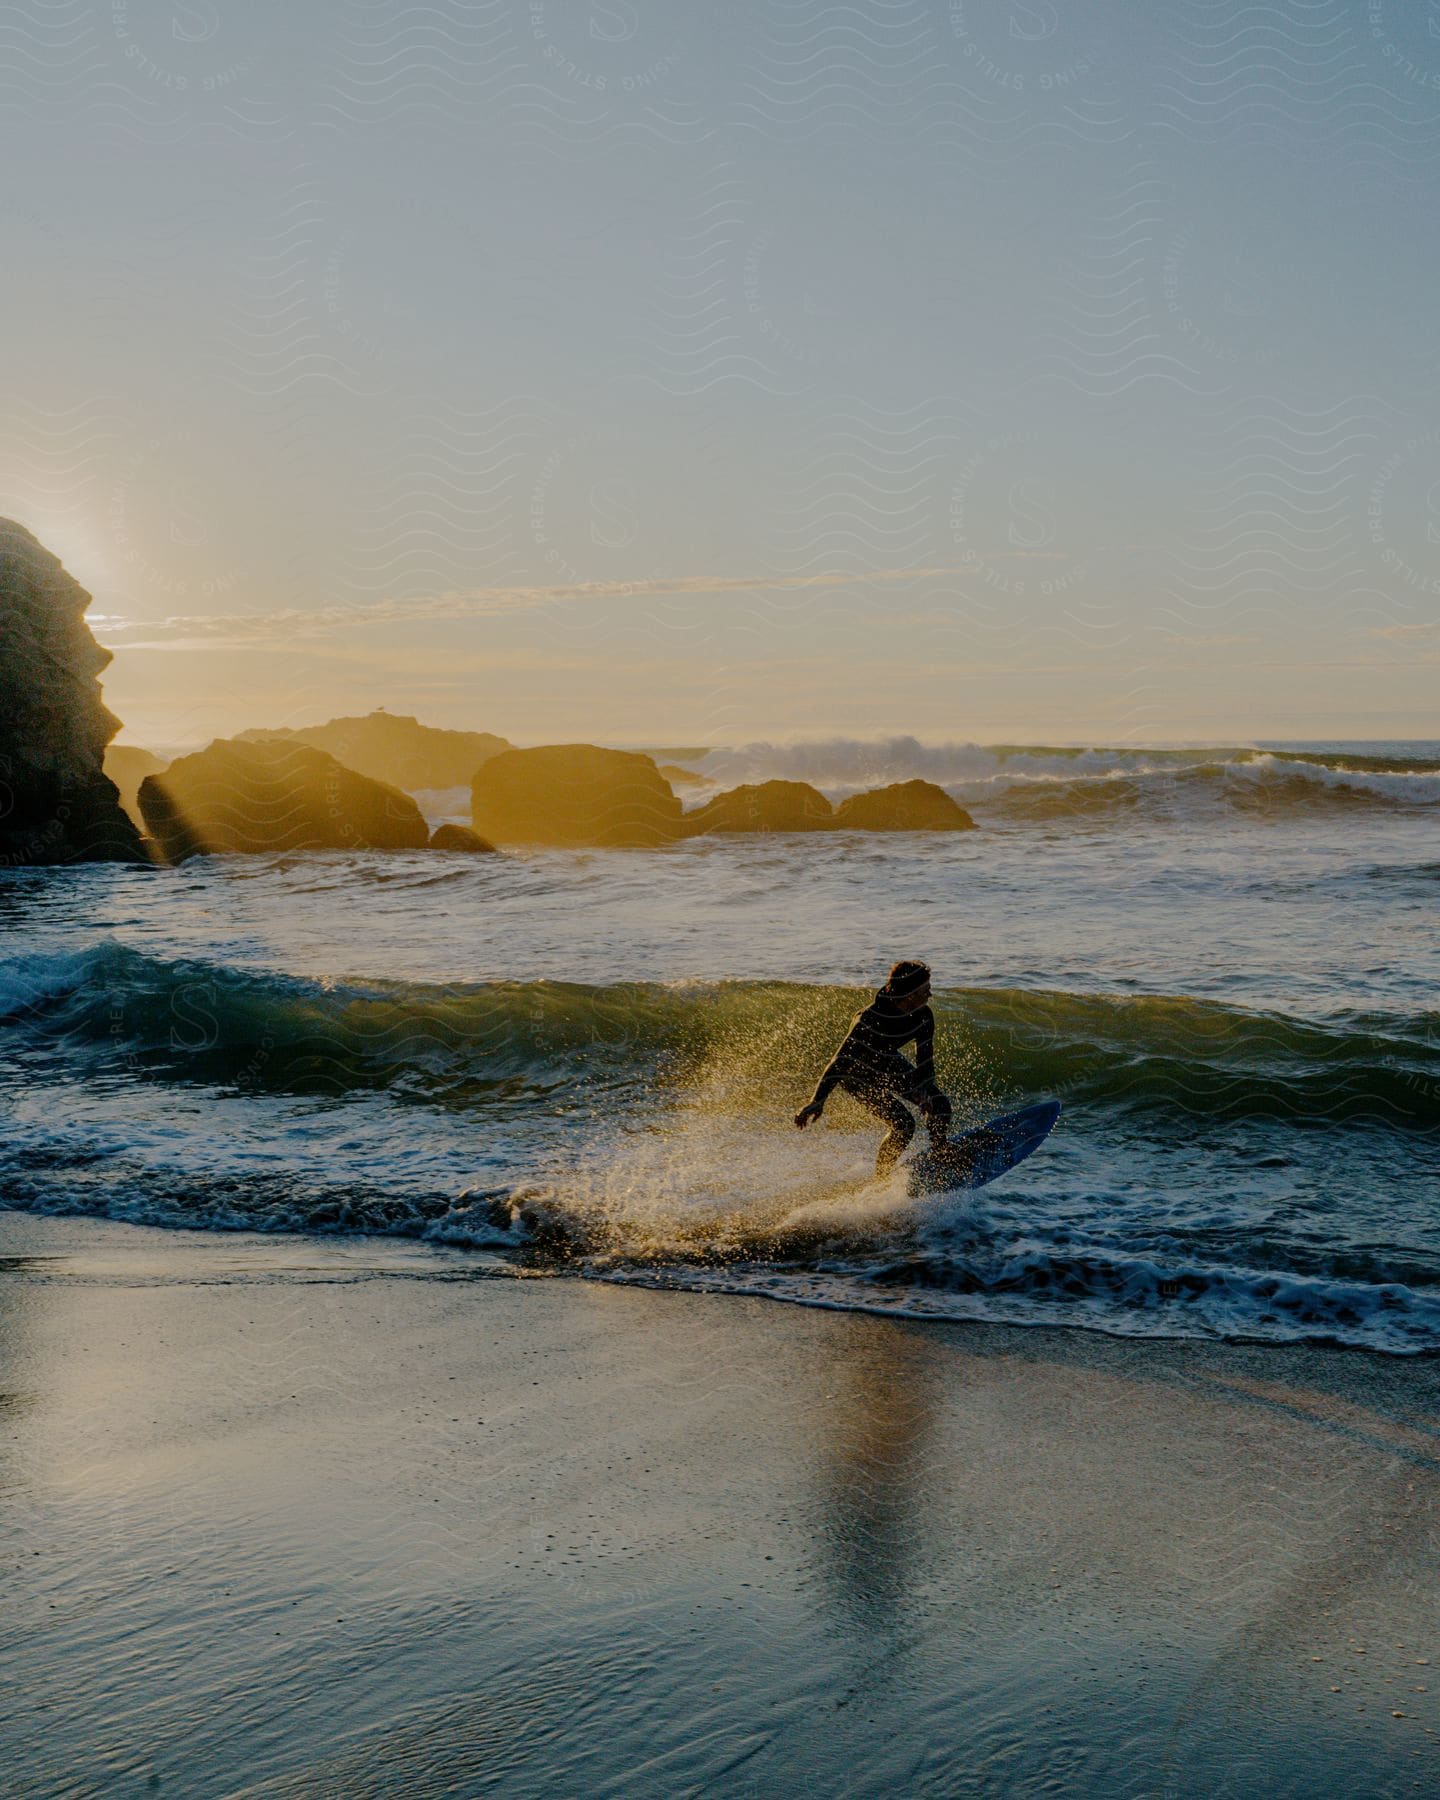 A woman surfing breaking waves.